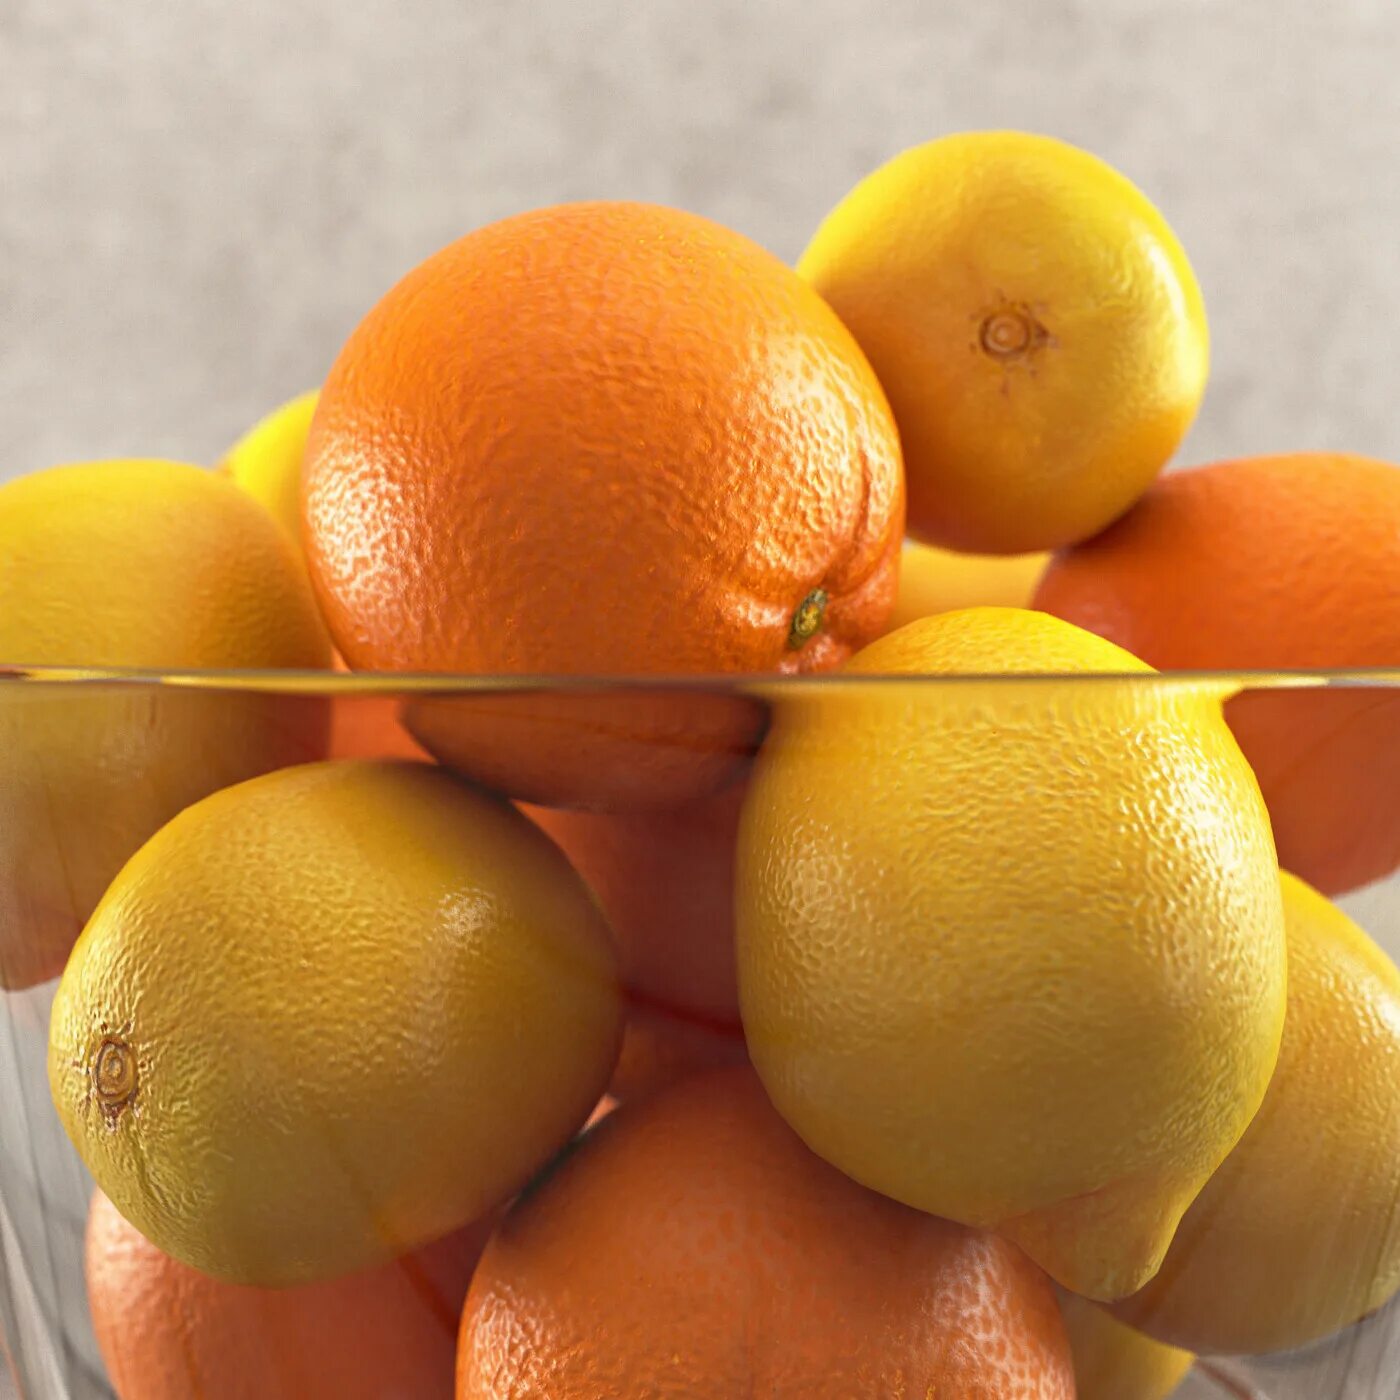 Тони лимон оранж. Лимон апельсин мандарин. Апельсин мандарин грейпфрут. Фотосессия с лимонами и апельсинами.